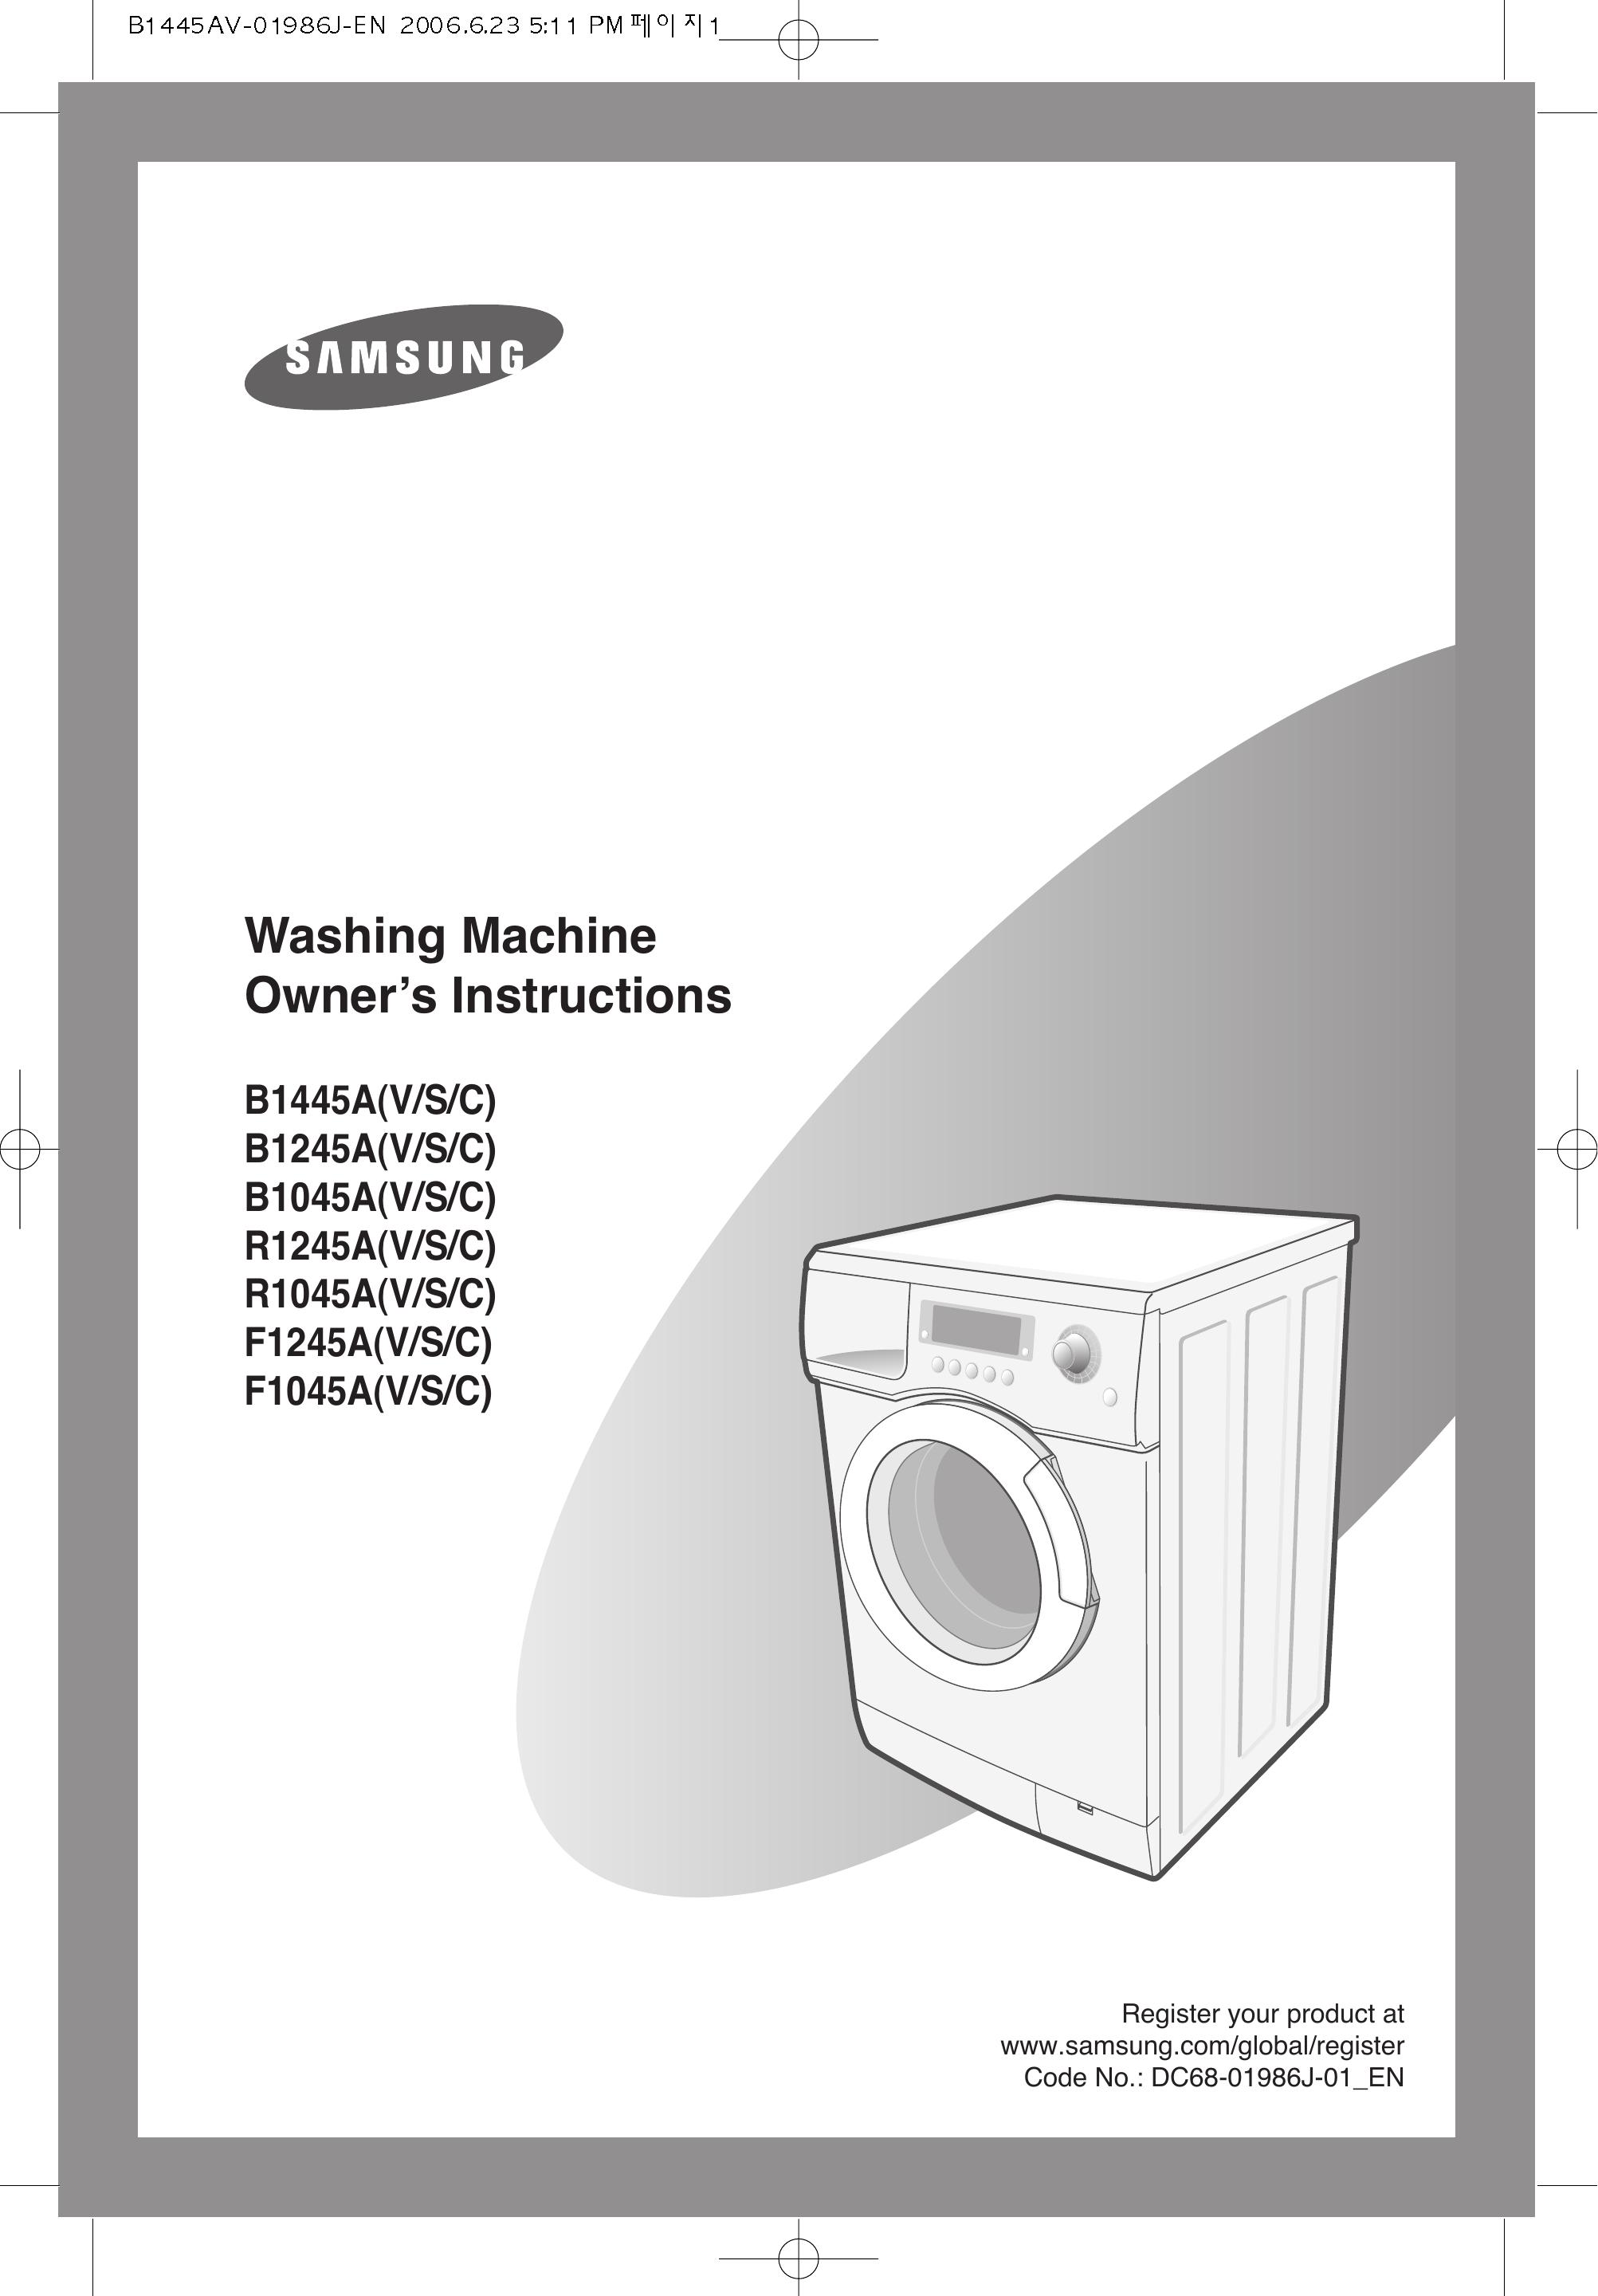 Samsung B1445A(V/S/C) Washer User Manual